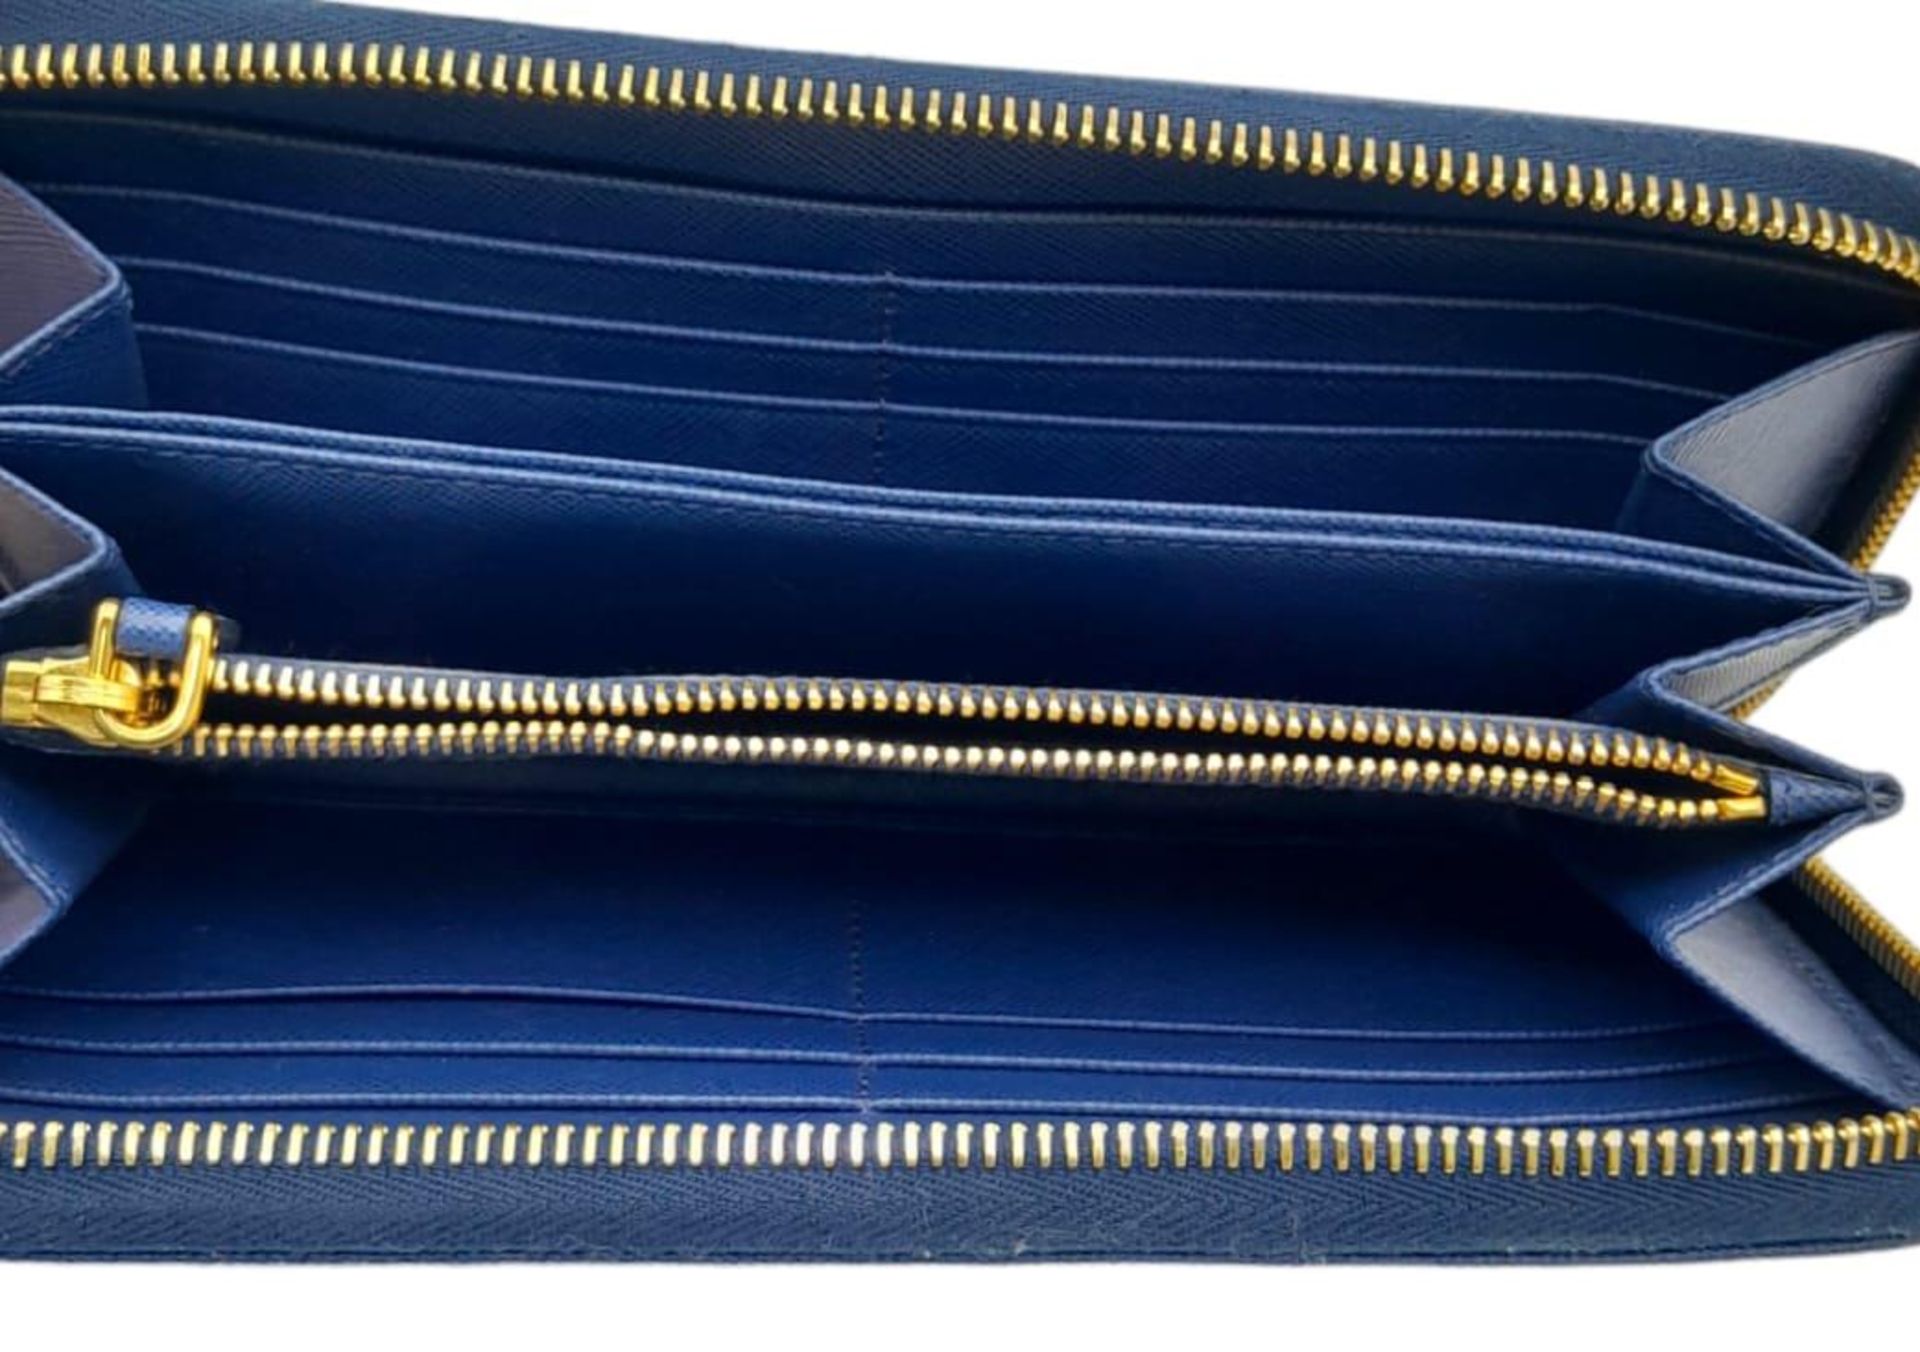 A Prada Royal Blue Purse/Wallet. Saffiano leather exterior, with the Prada logo in gold-toned - Bild 4 aus 7